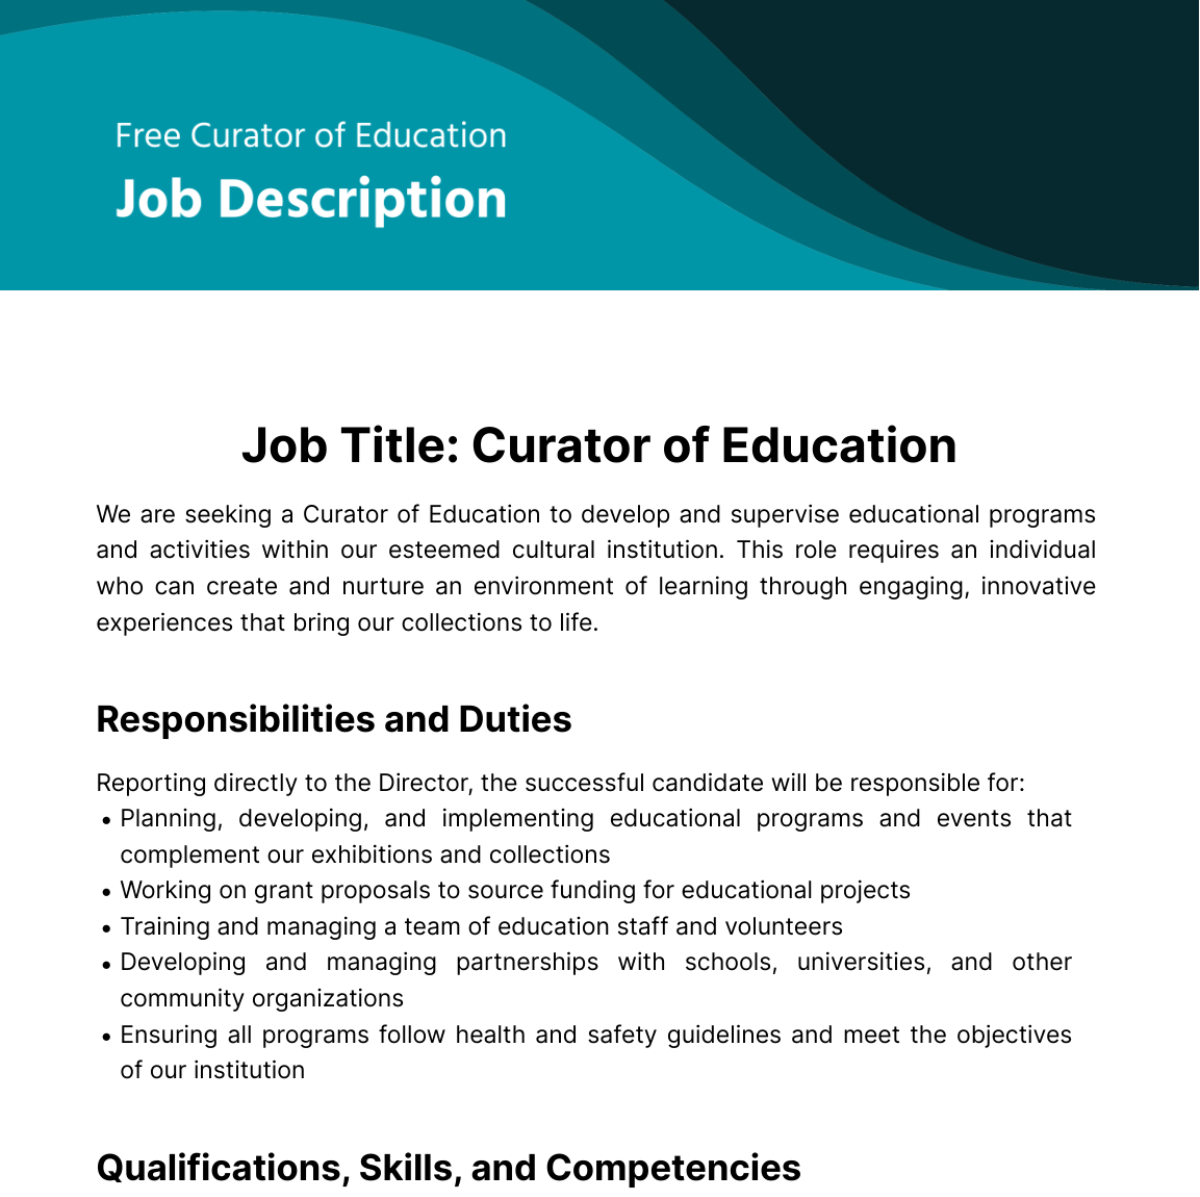 Free Curator of Education Job Description Template